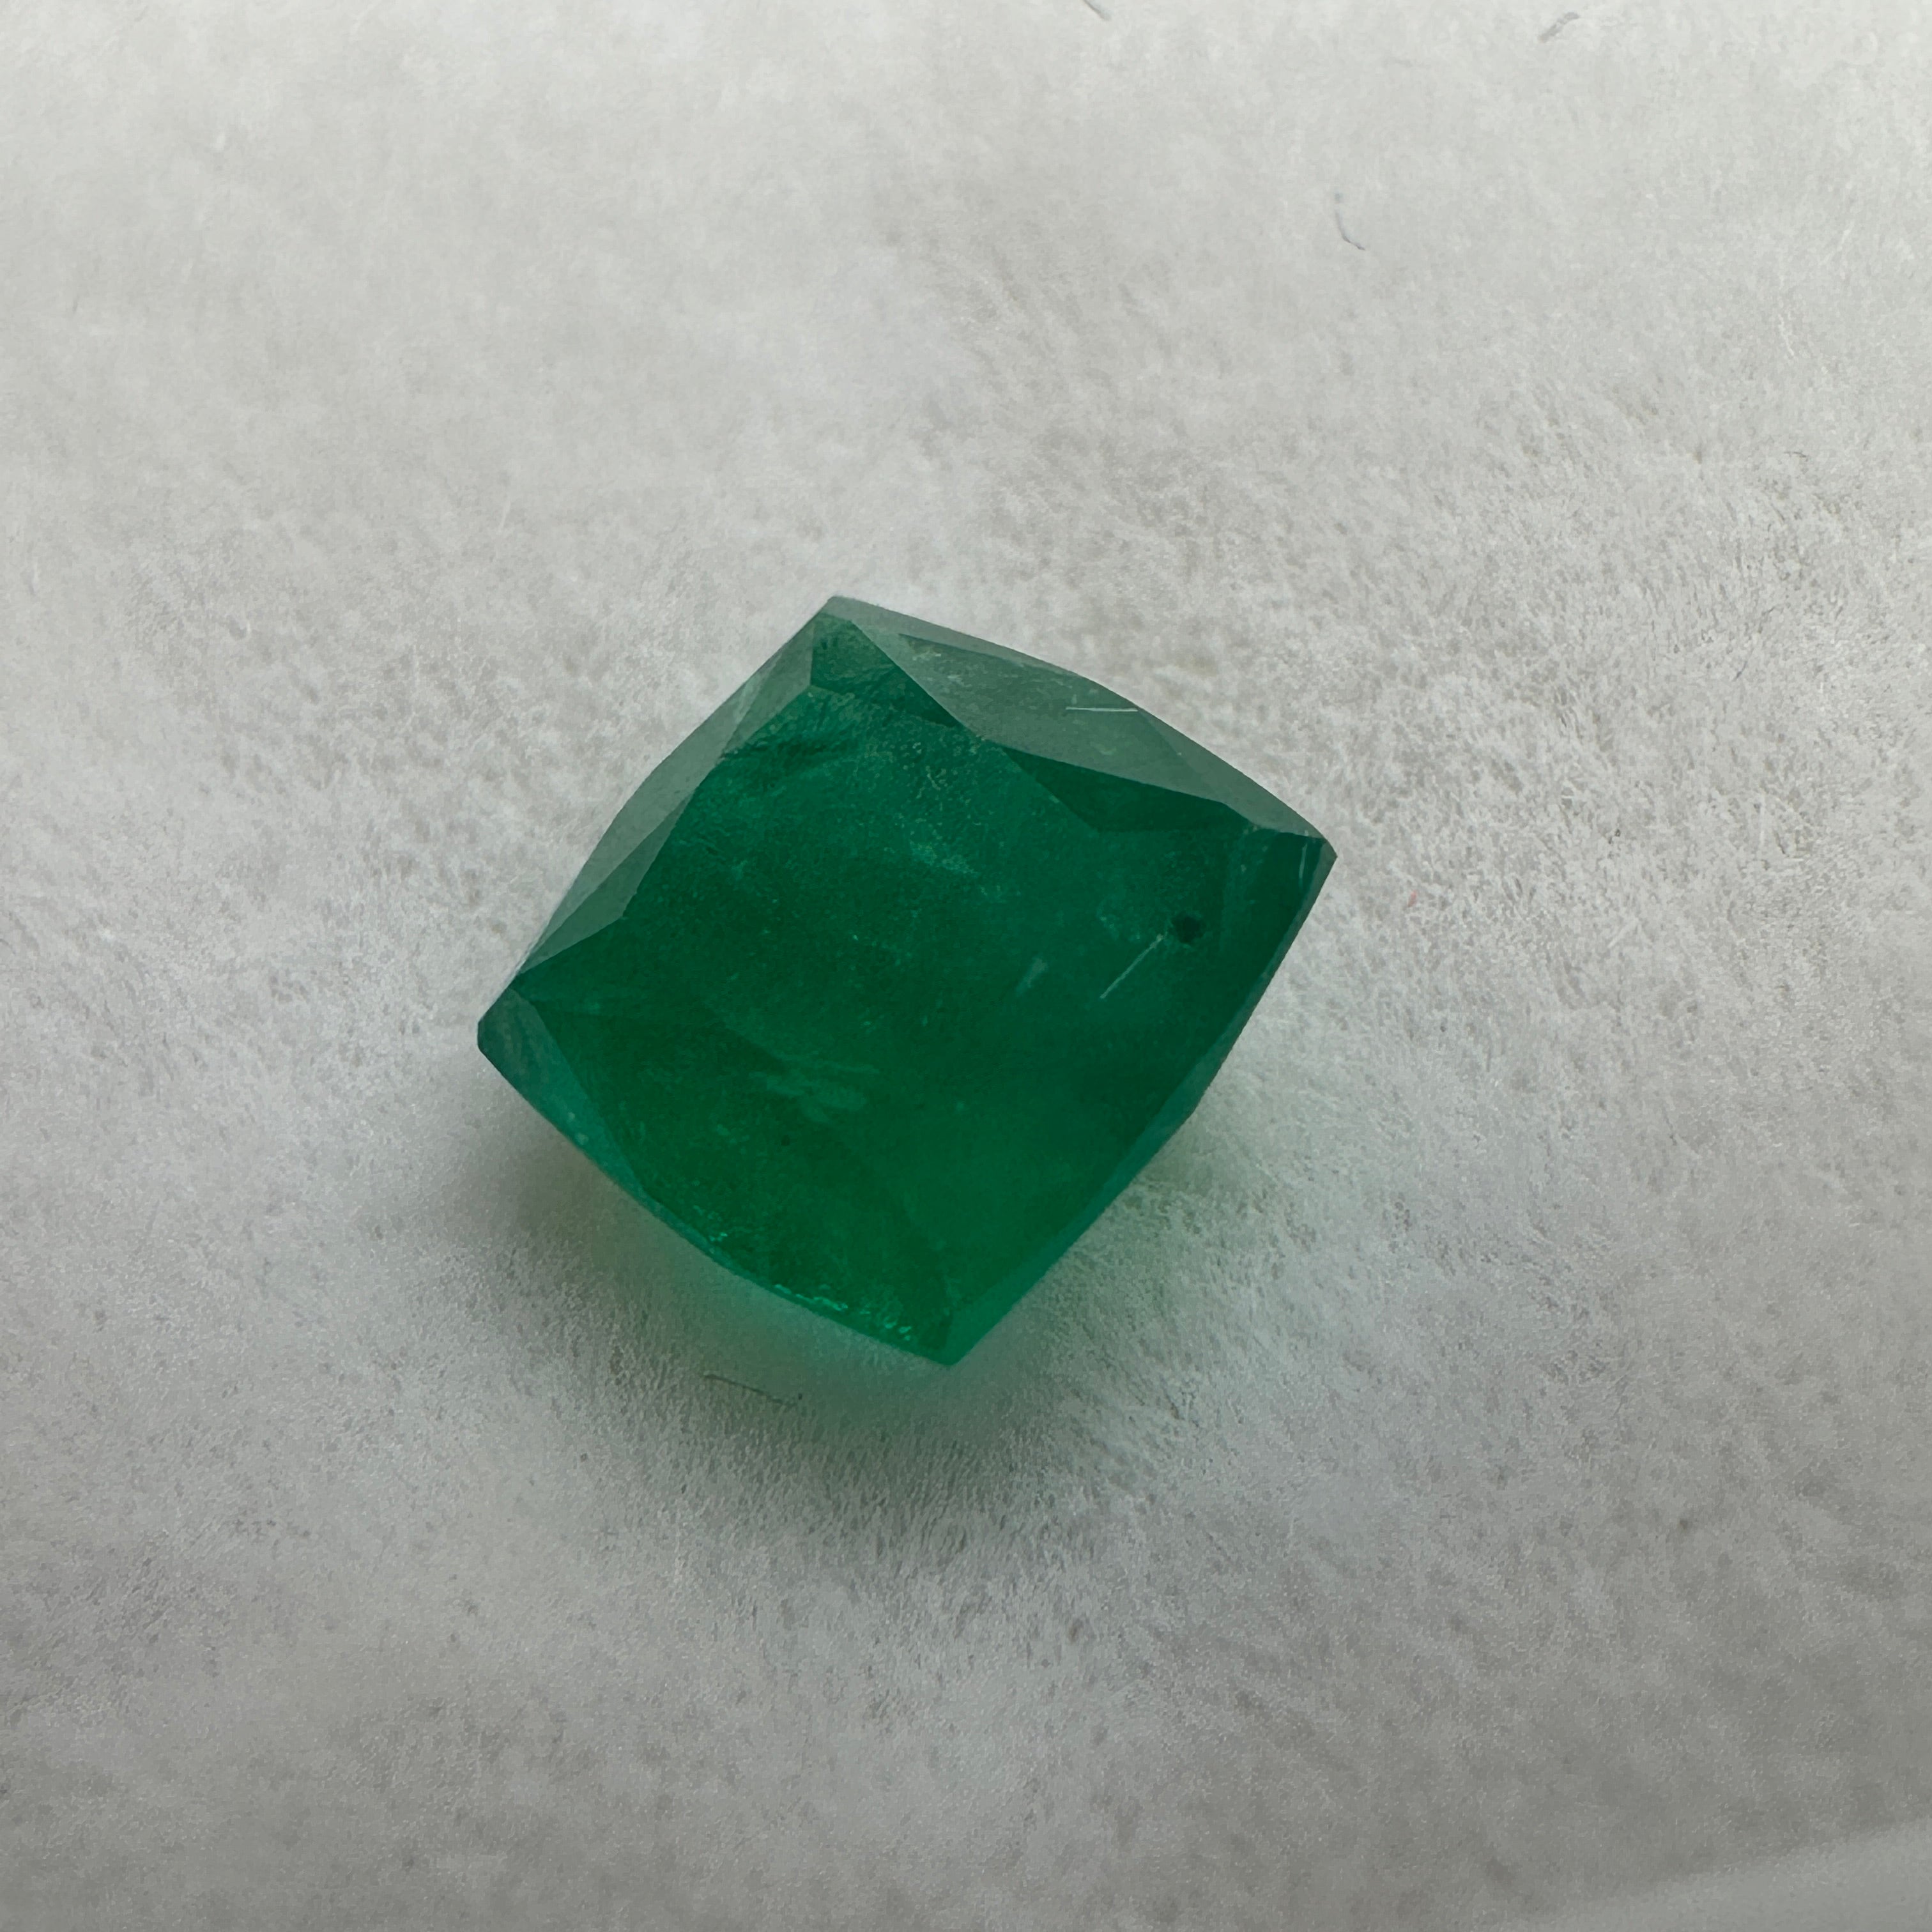 0.67ct Emerald, Tanzania, No Oil, Untreated Unheated.